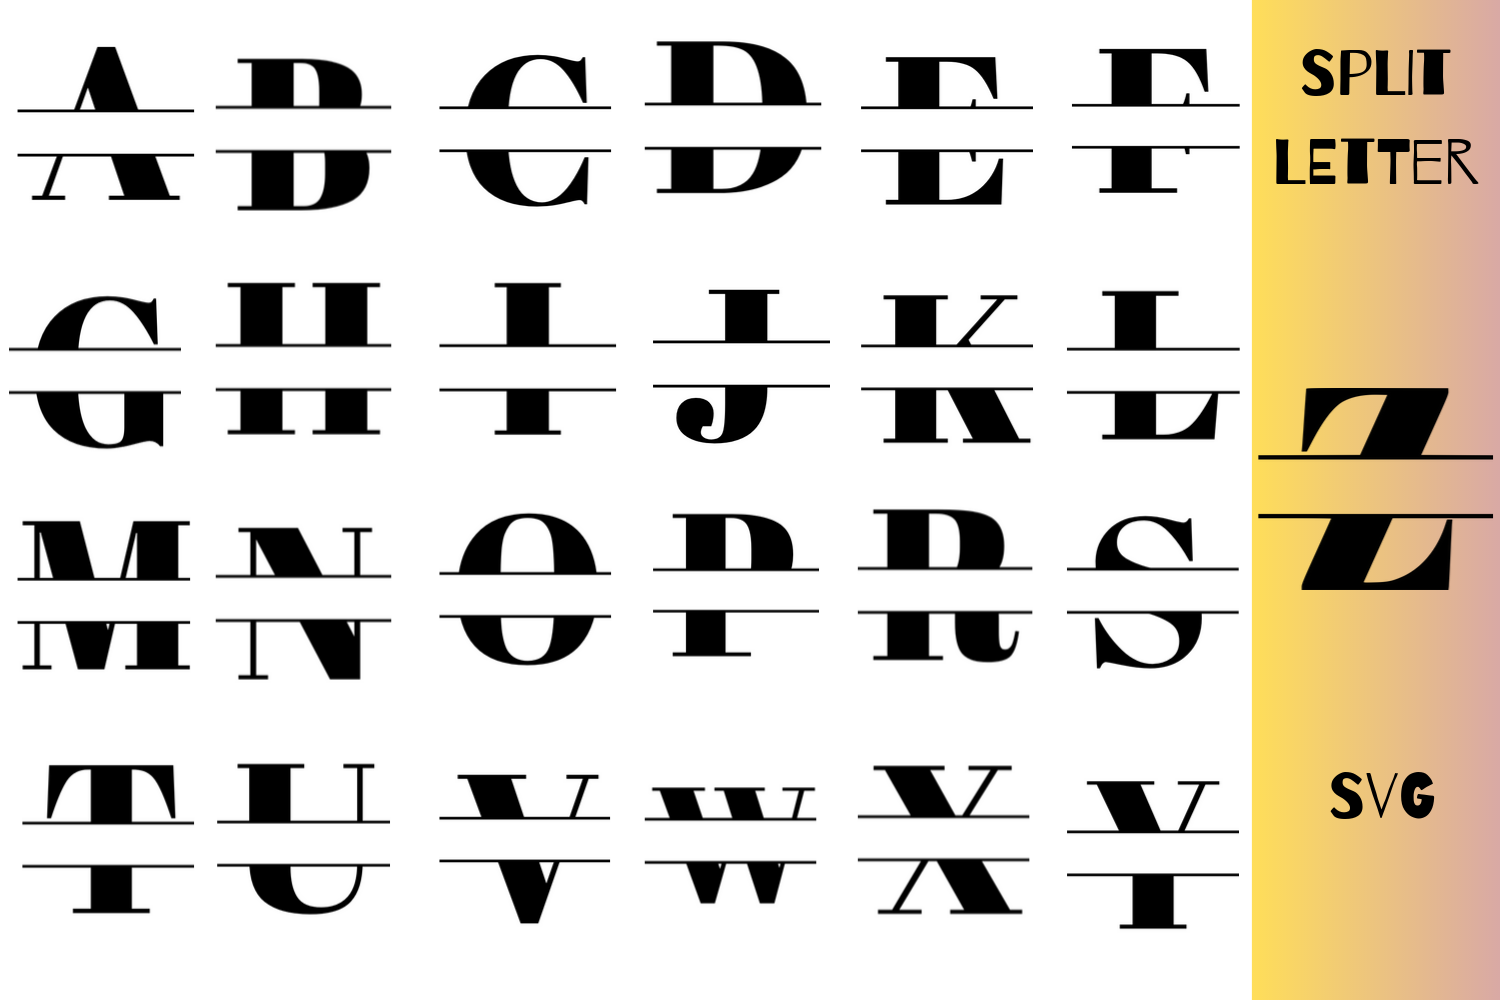 Split Letter SVG A-Z For Cricut|Complete Alphabet Split Letter SVG|Ins